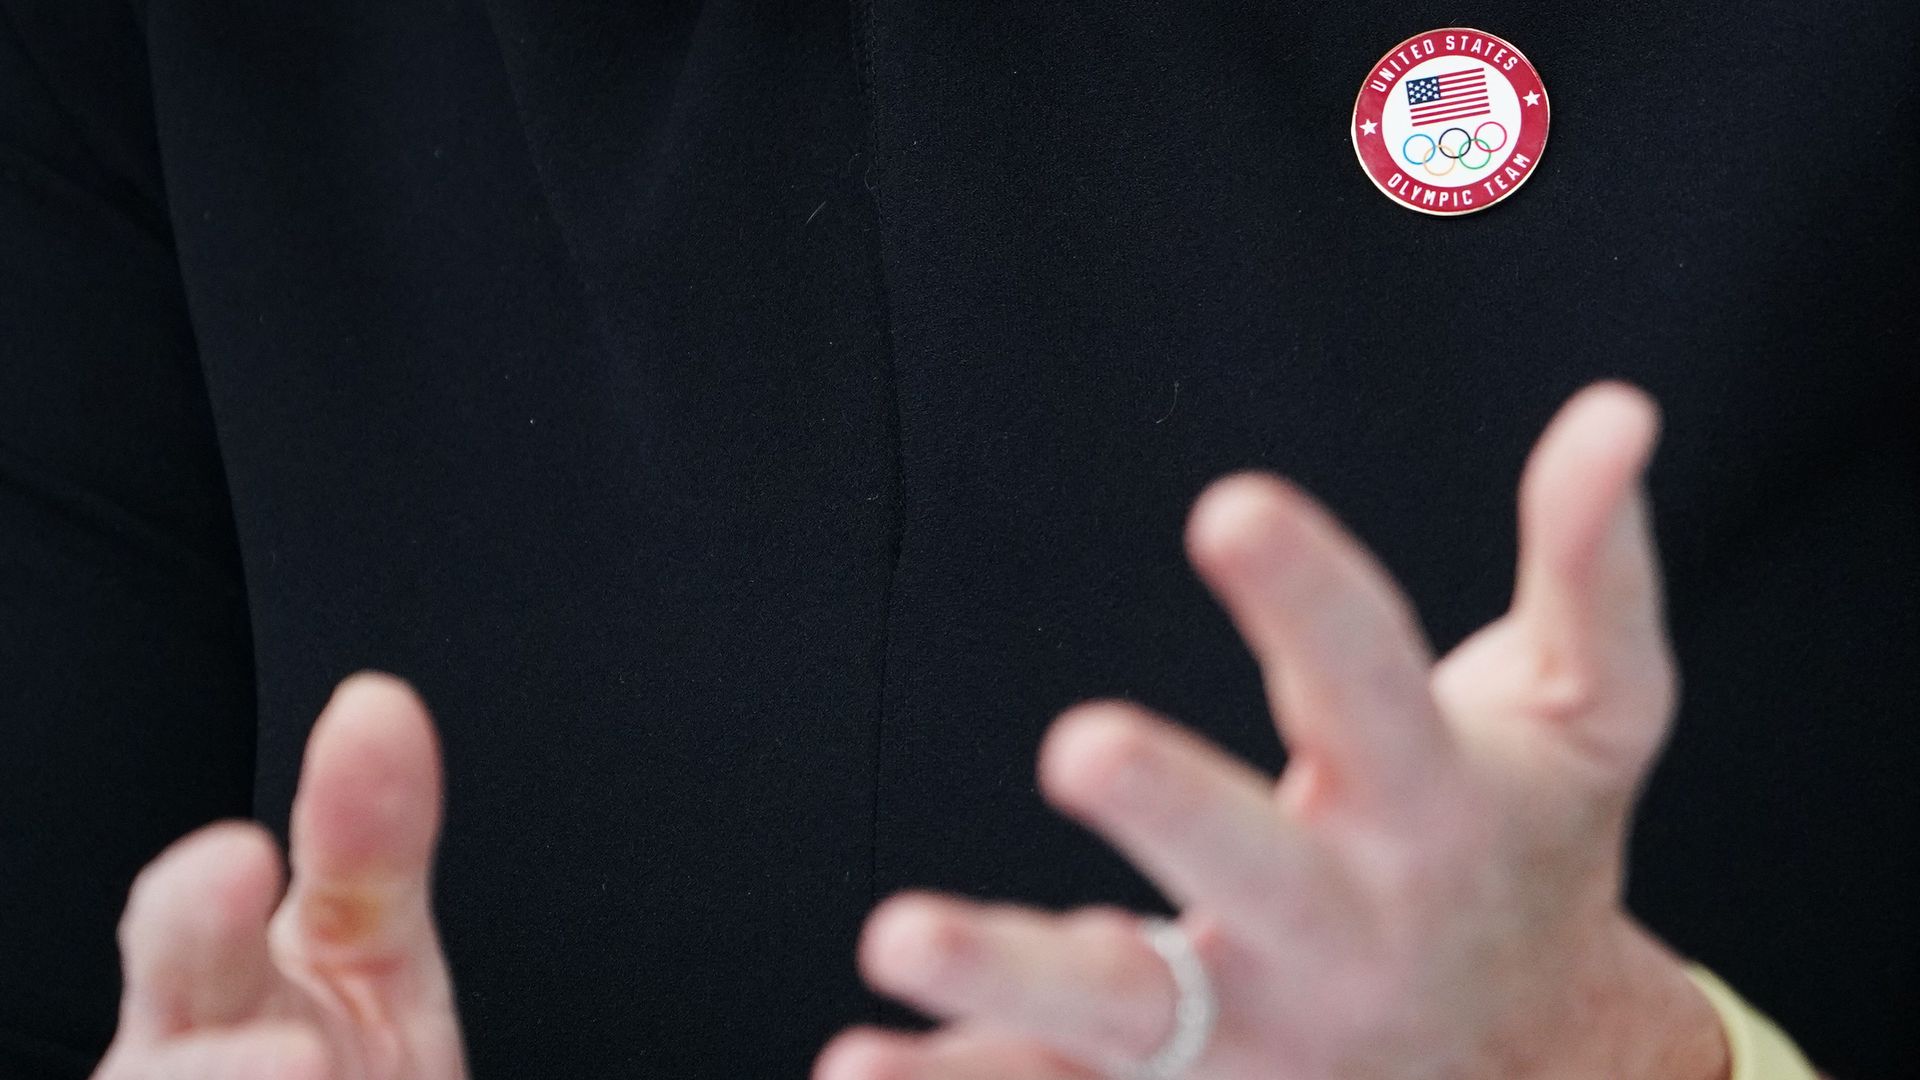 A U.S. Olympic team pin is seen being worn by White House press secretary Jen Psaki.